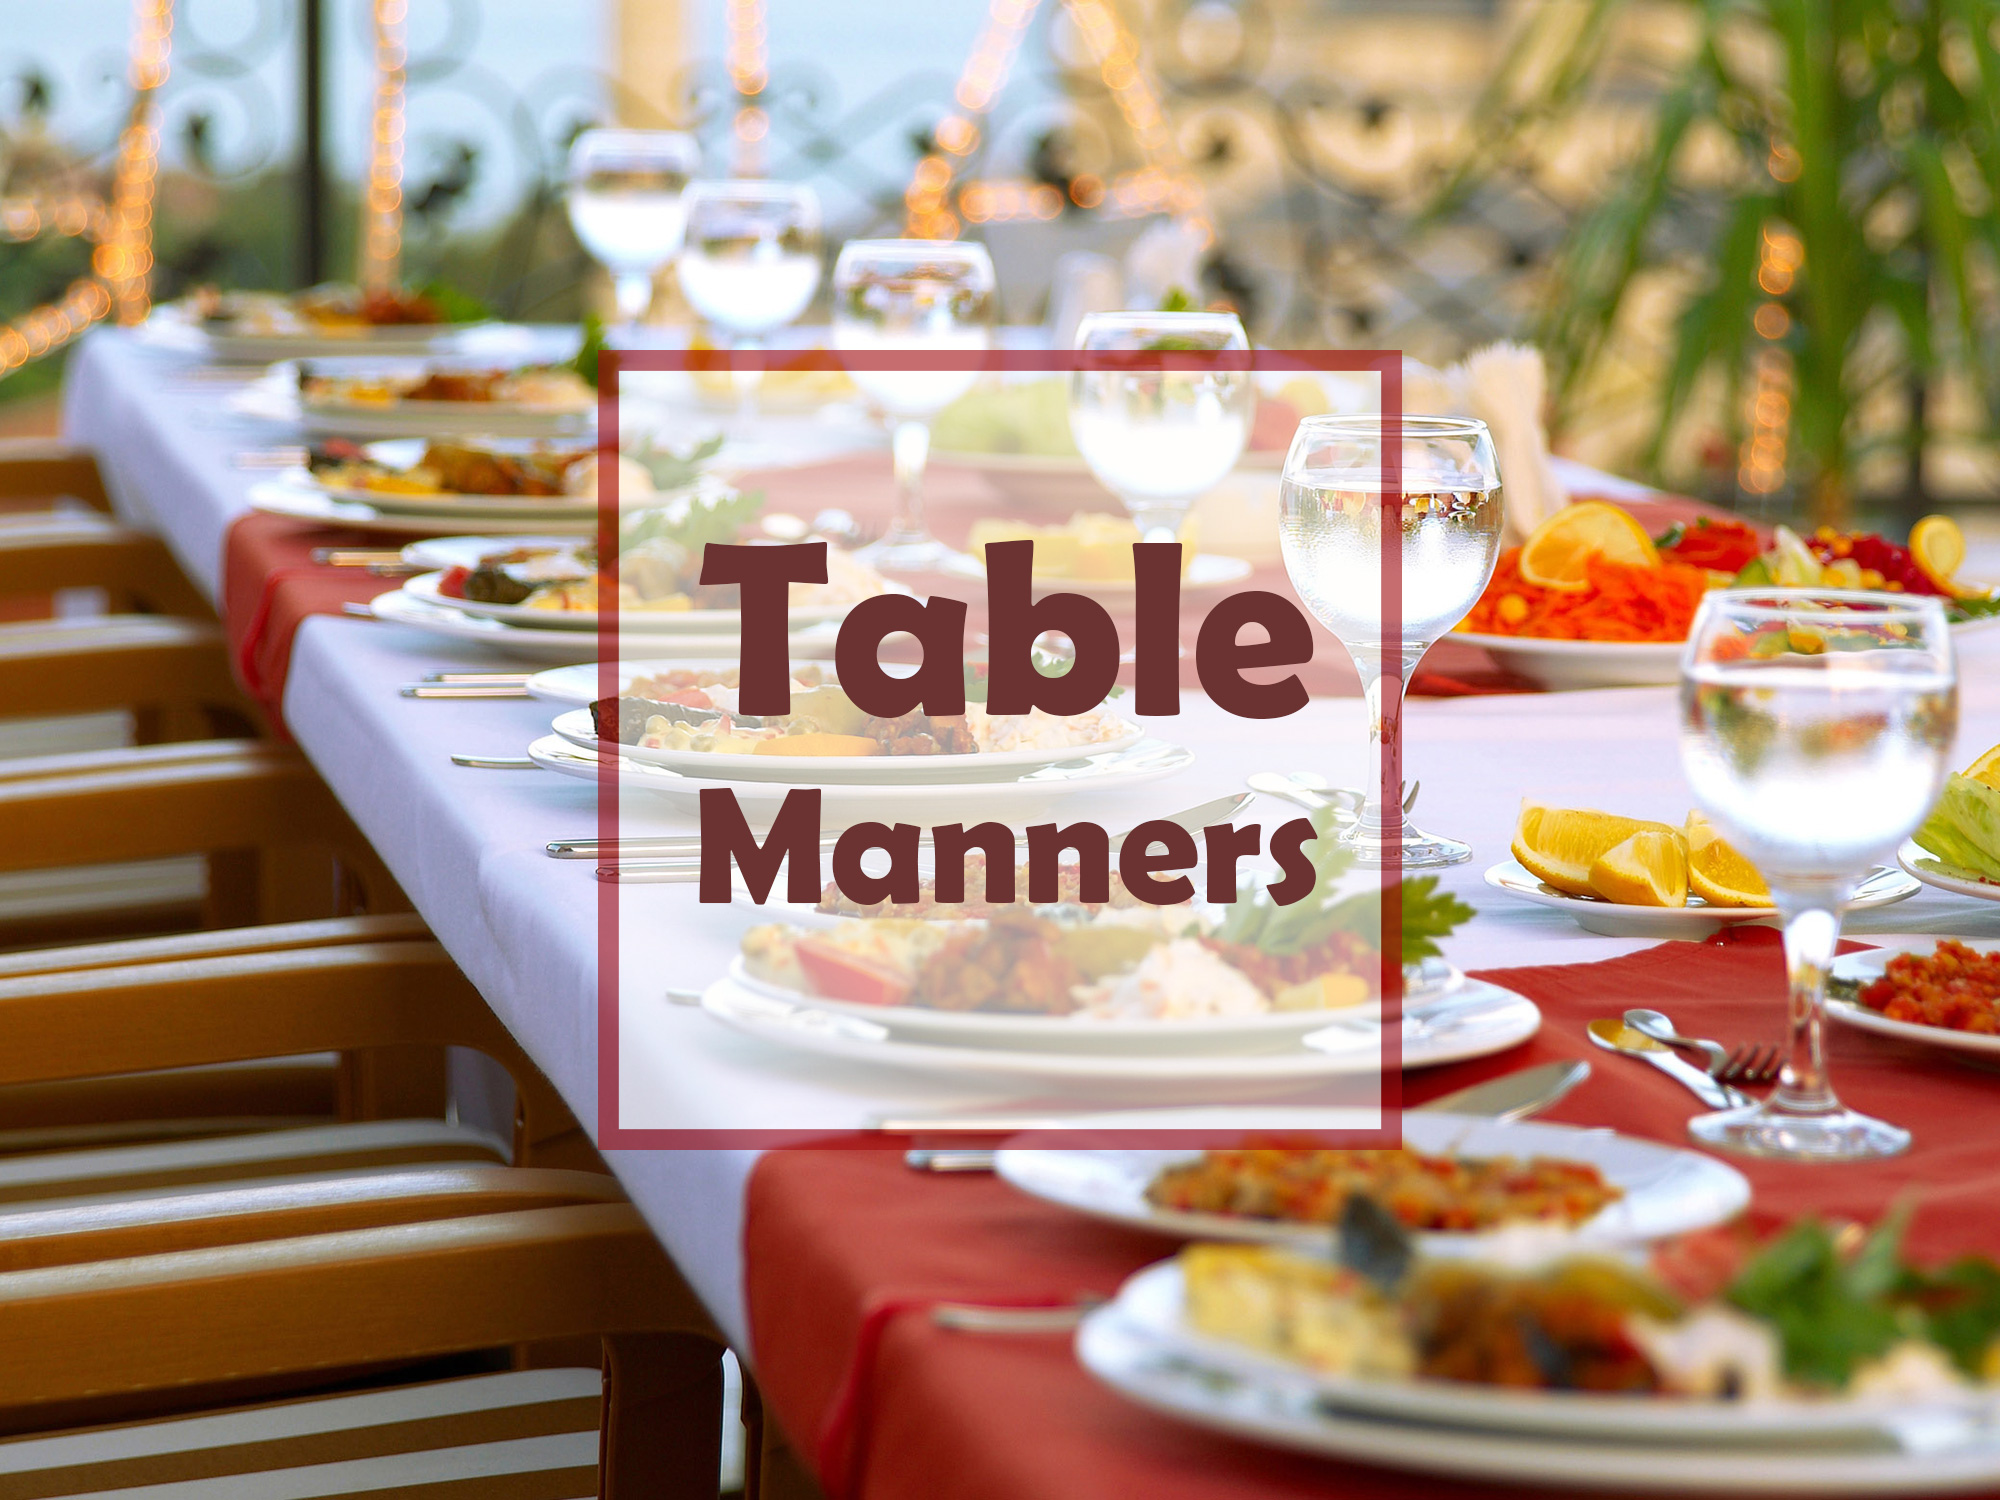 https://www.etiquettescholar.com/images/dining_etiquette/table_manners/table-manners-image-4x3.jpg